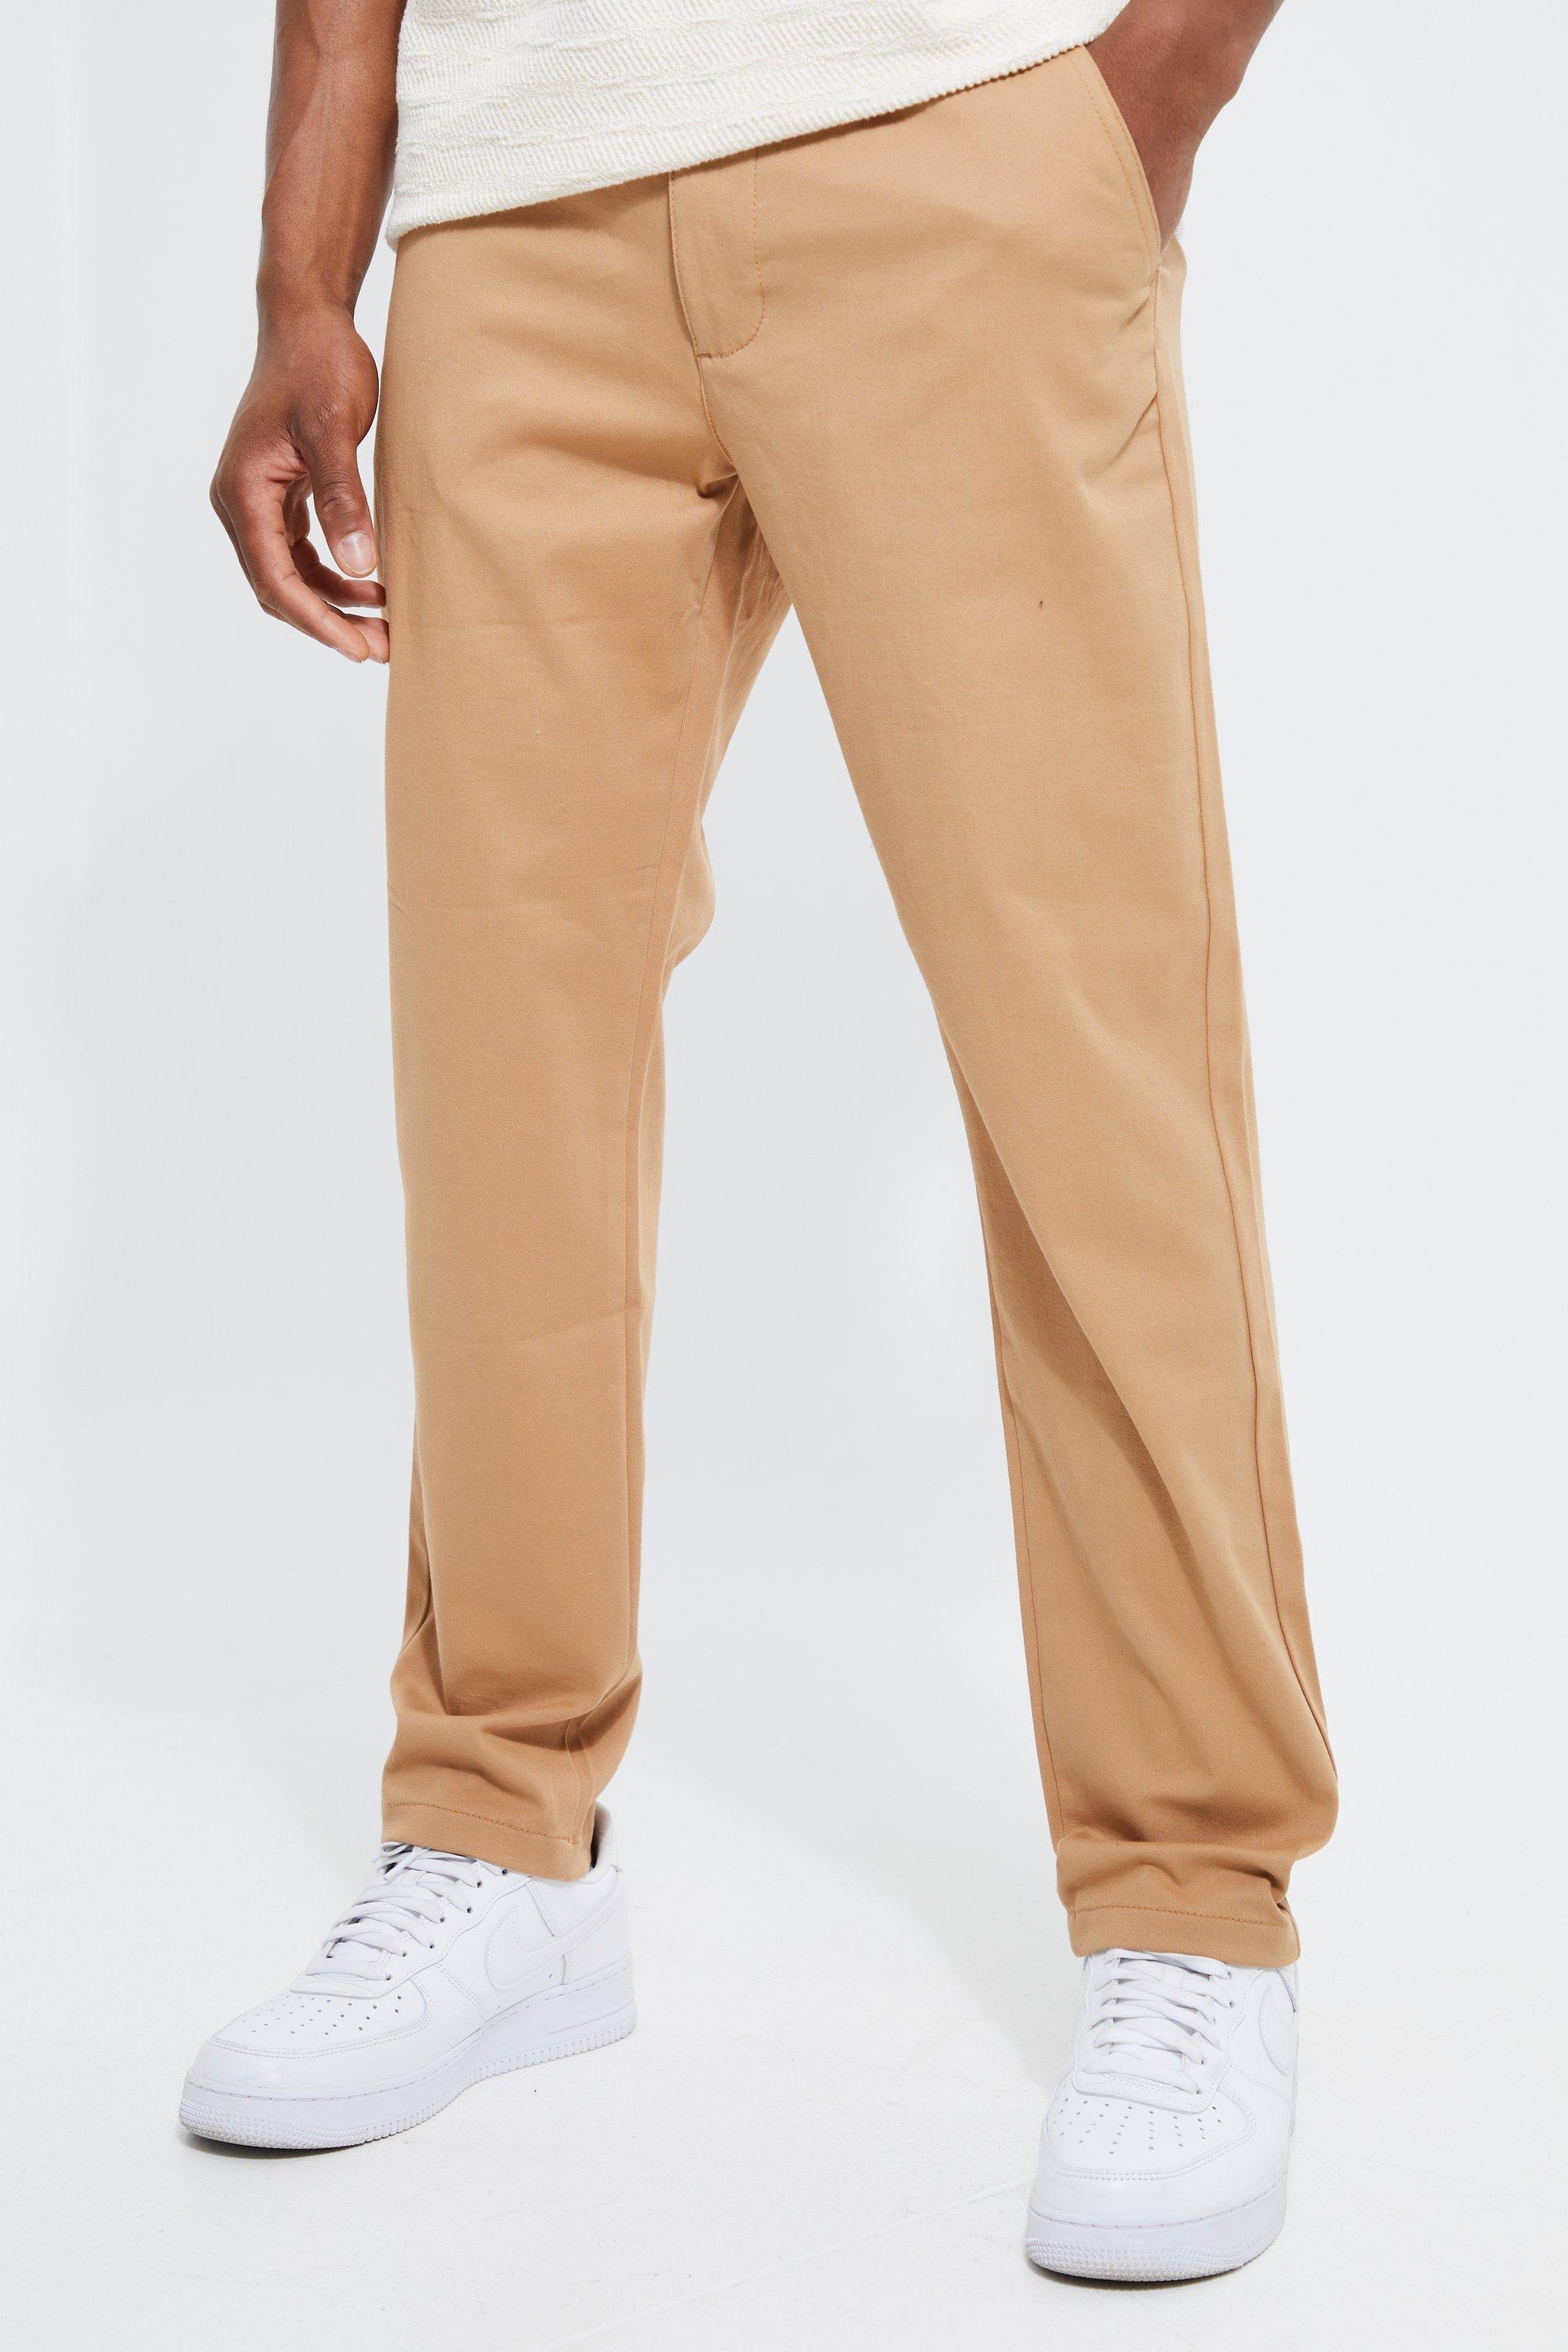 pantalon chino slim homme - brun doré - 32, brun doré